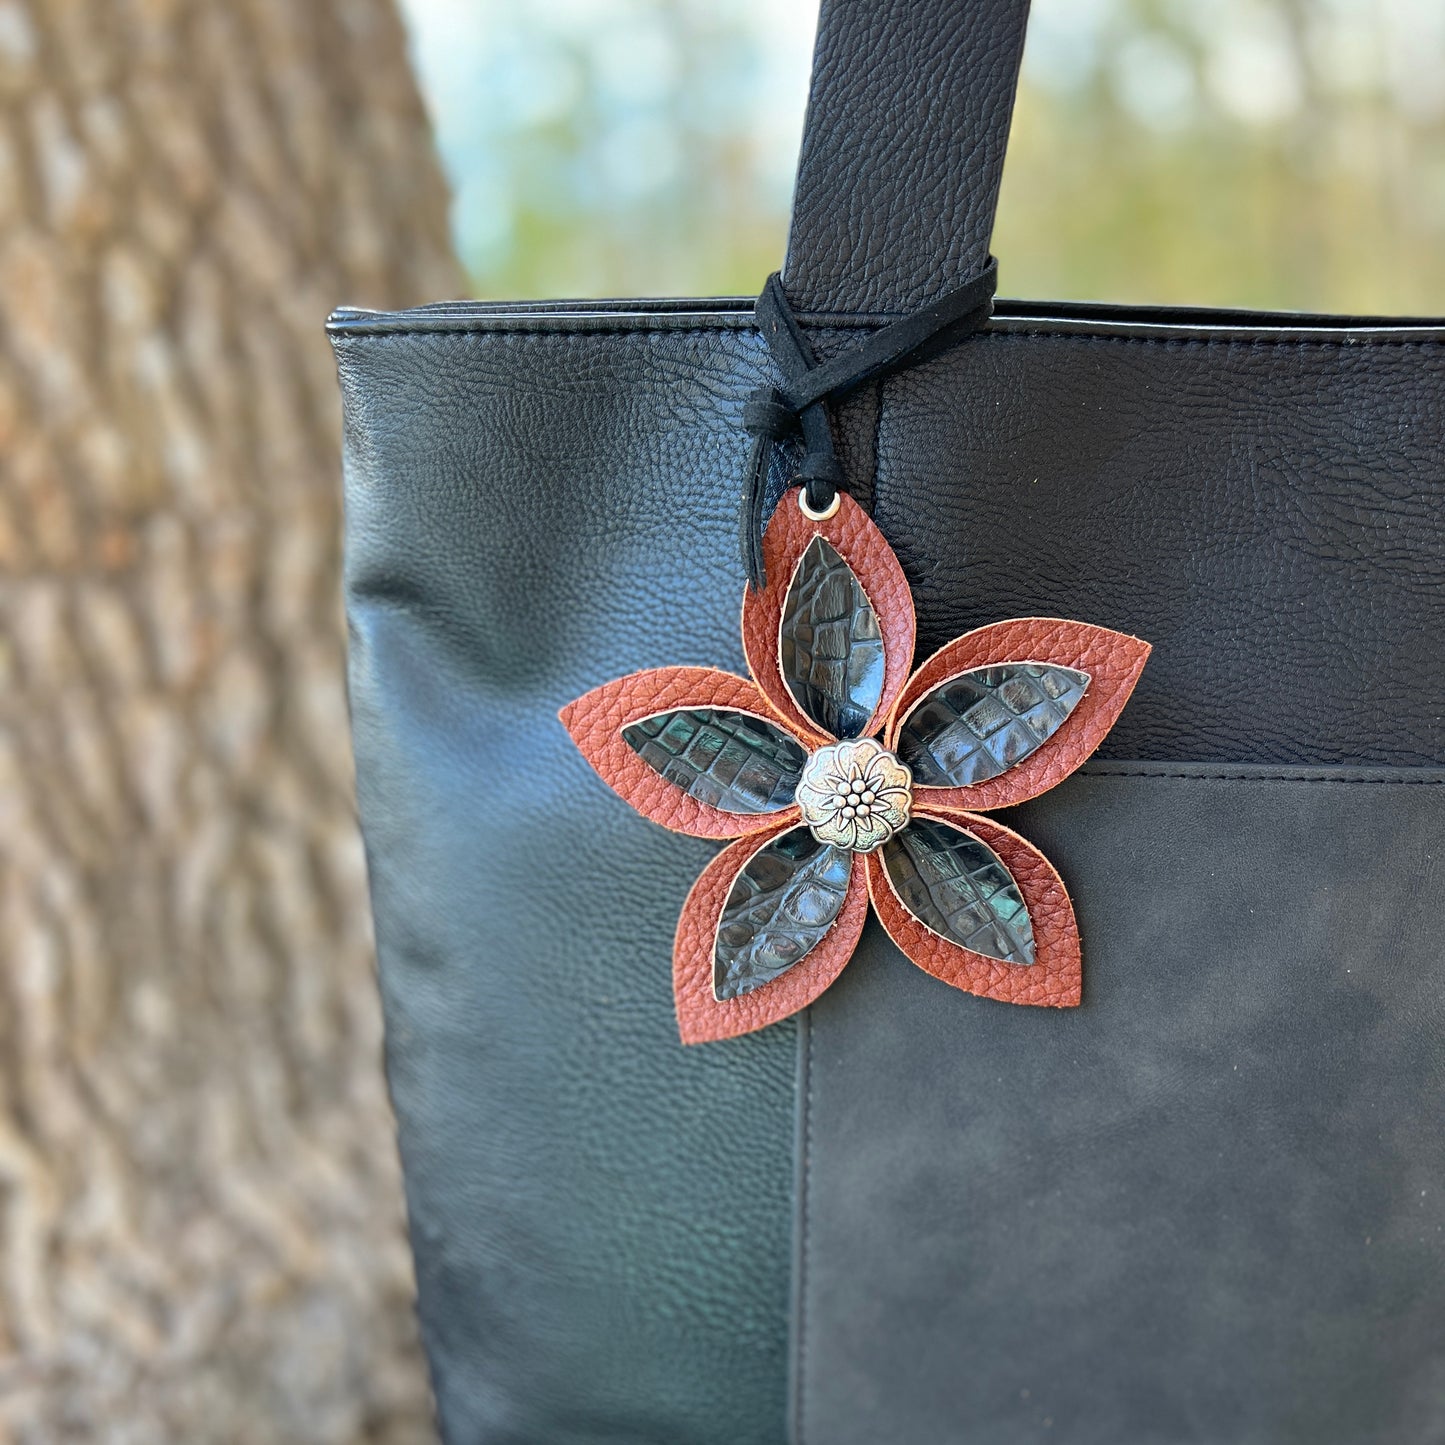 Leather Flower Bag Charm - Large Flower with Loop -Black Croc on Brown